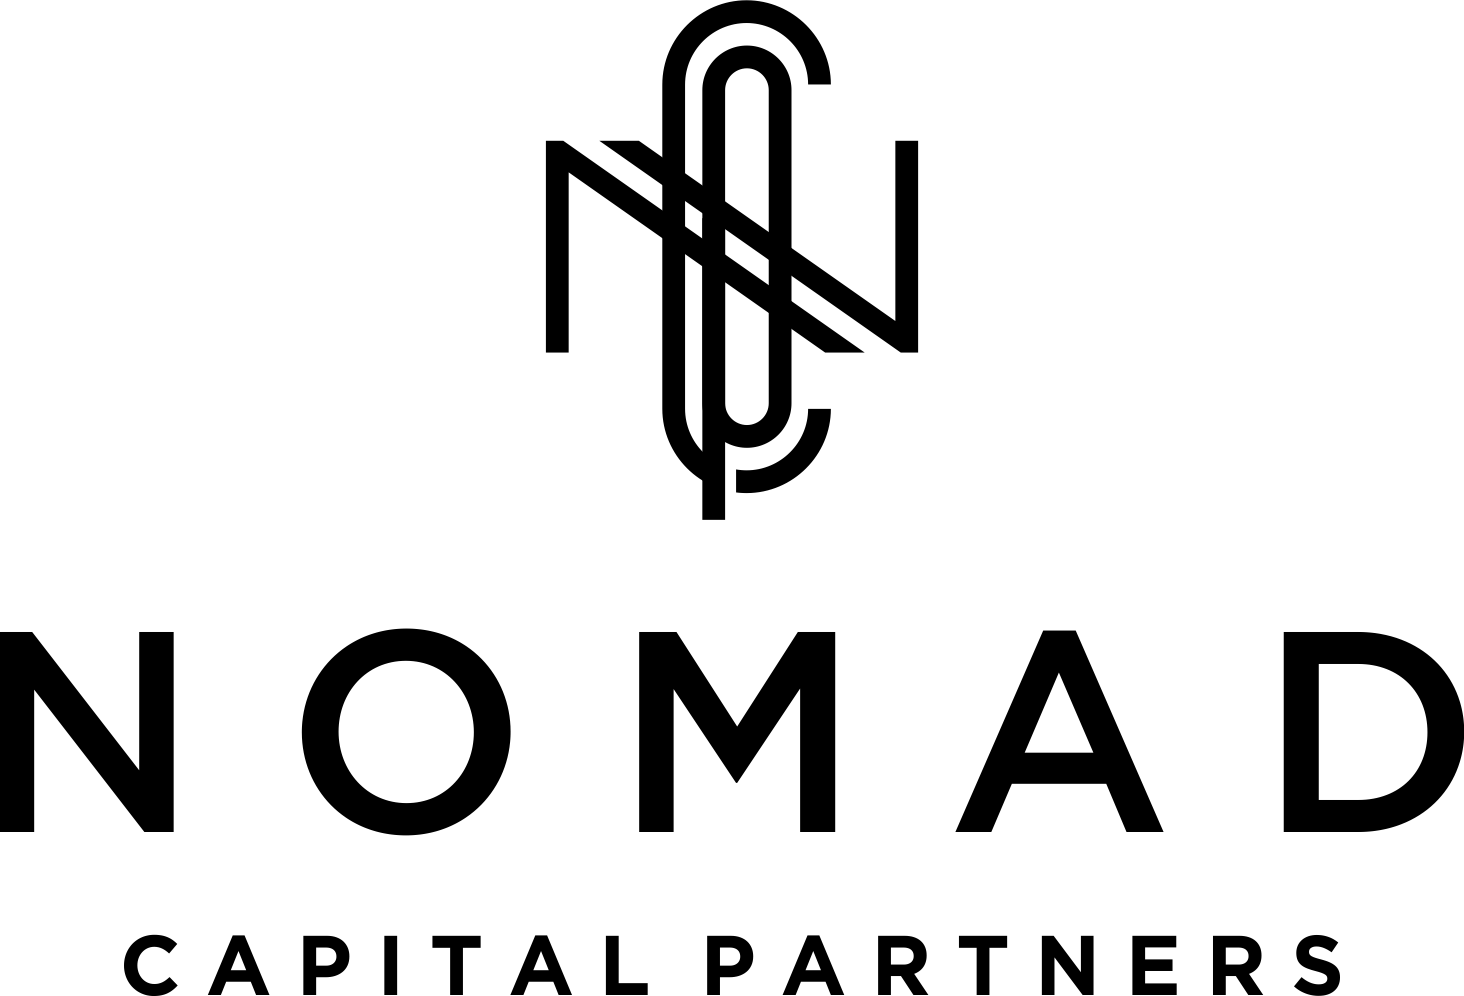 Nomad Capital Partners